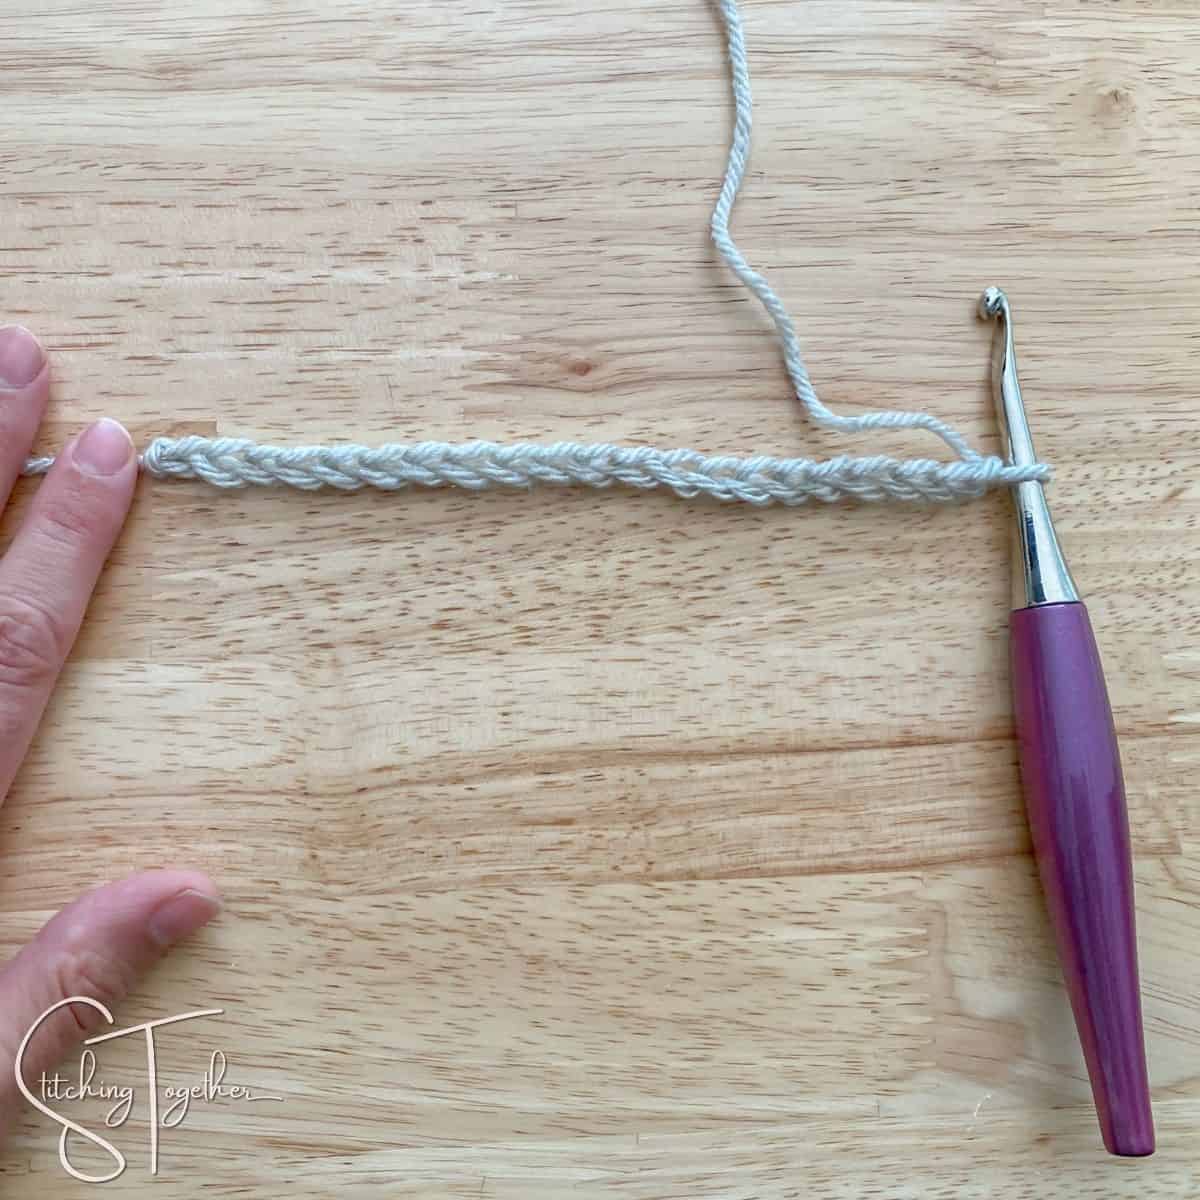 starting crochet chain and crochet hook